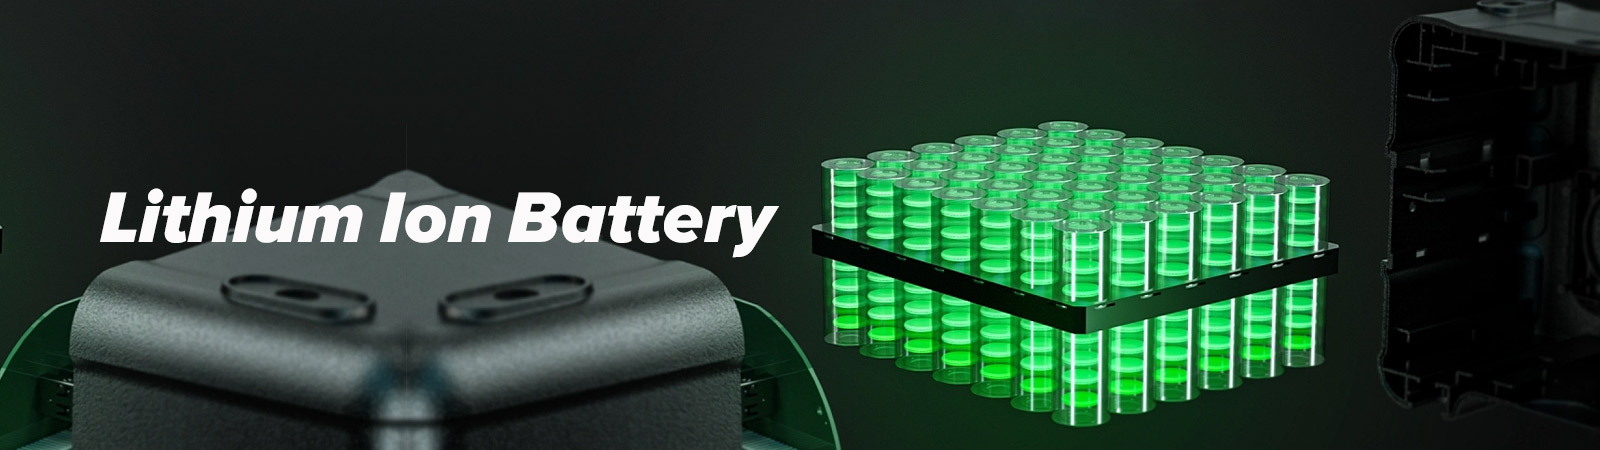 Electric Kart Battery